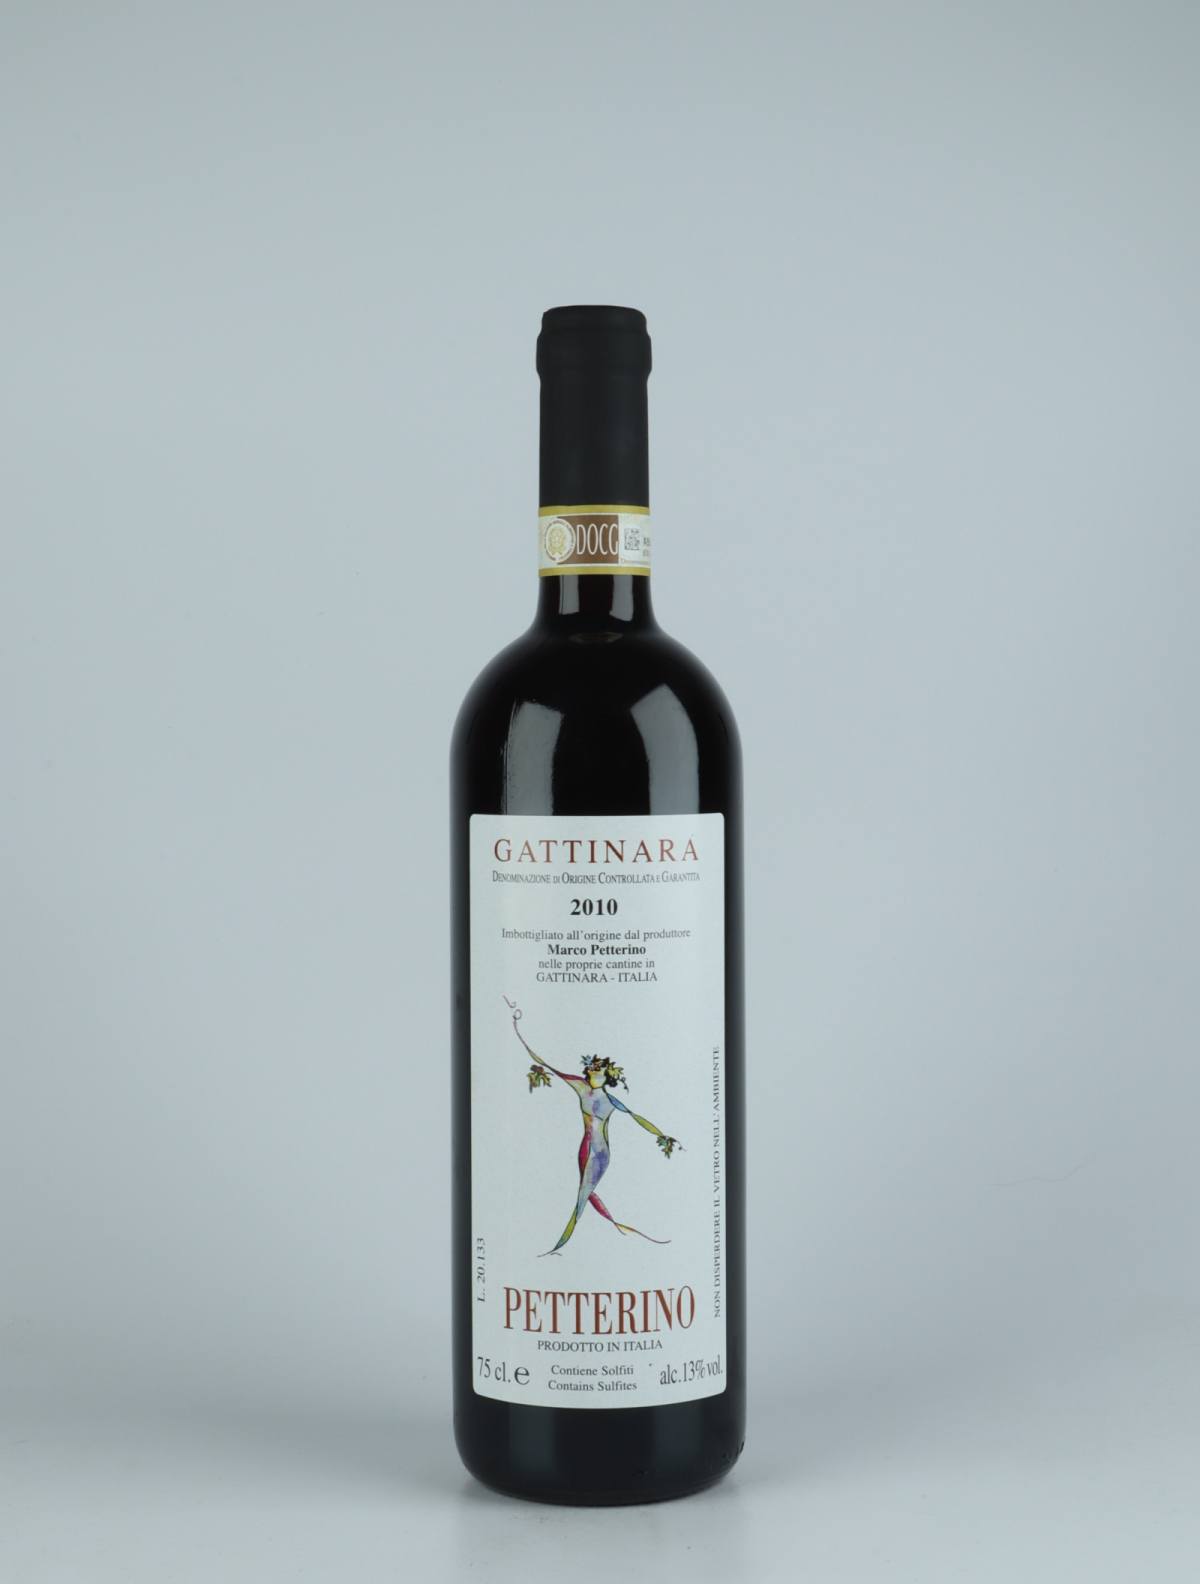 A bottle 2010 Gattinara Red wine from Petterino, Piedmont in Italy